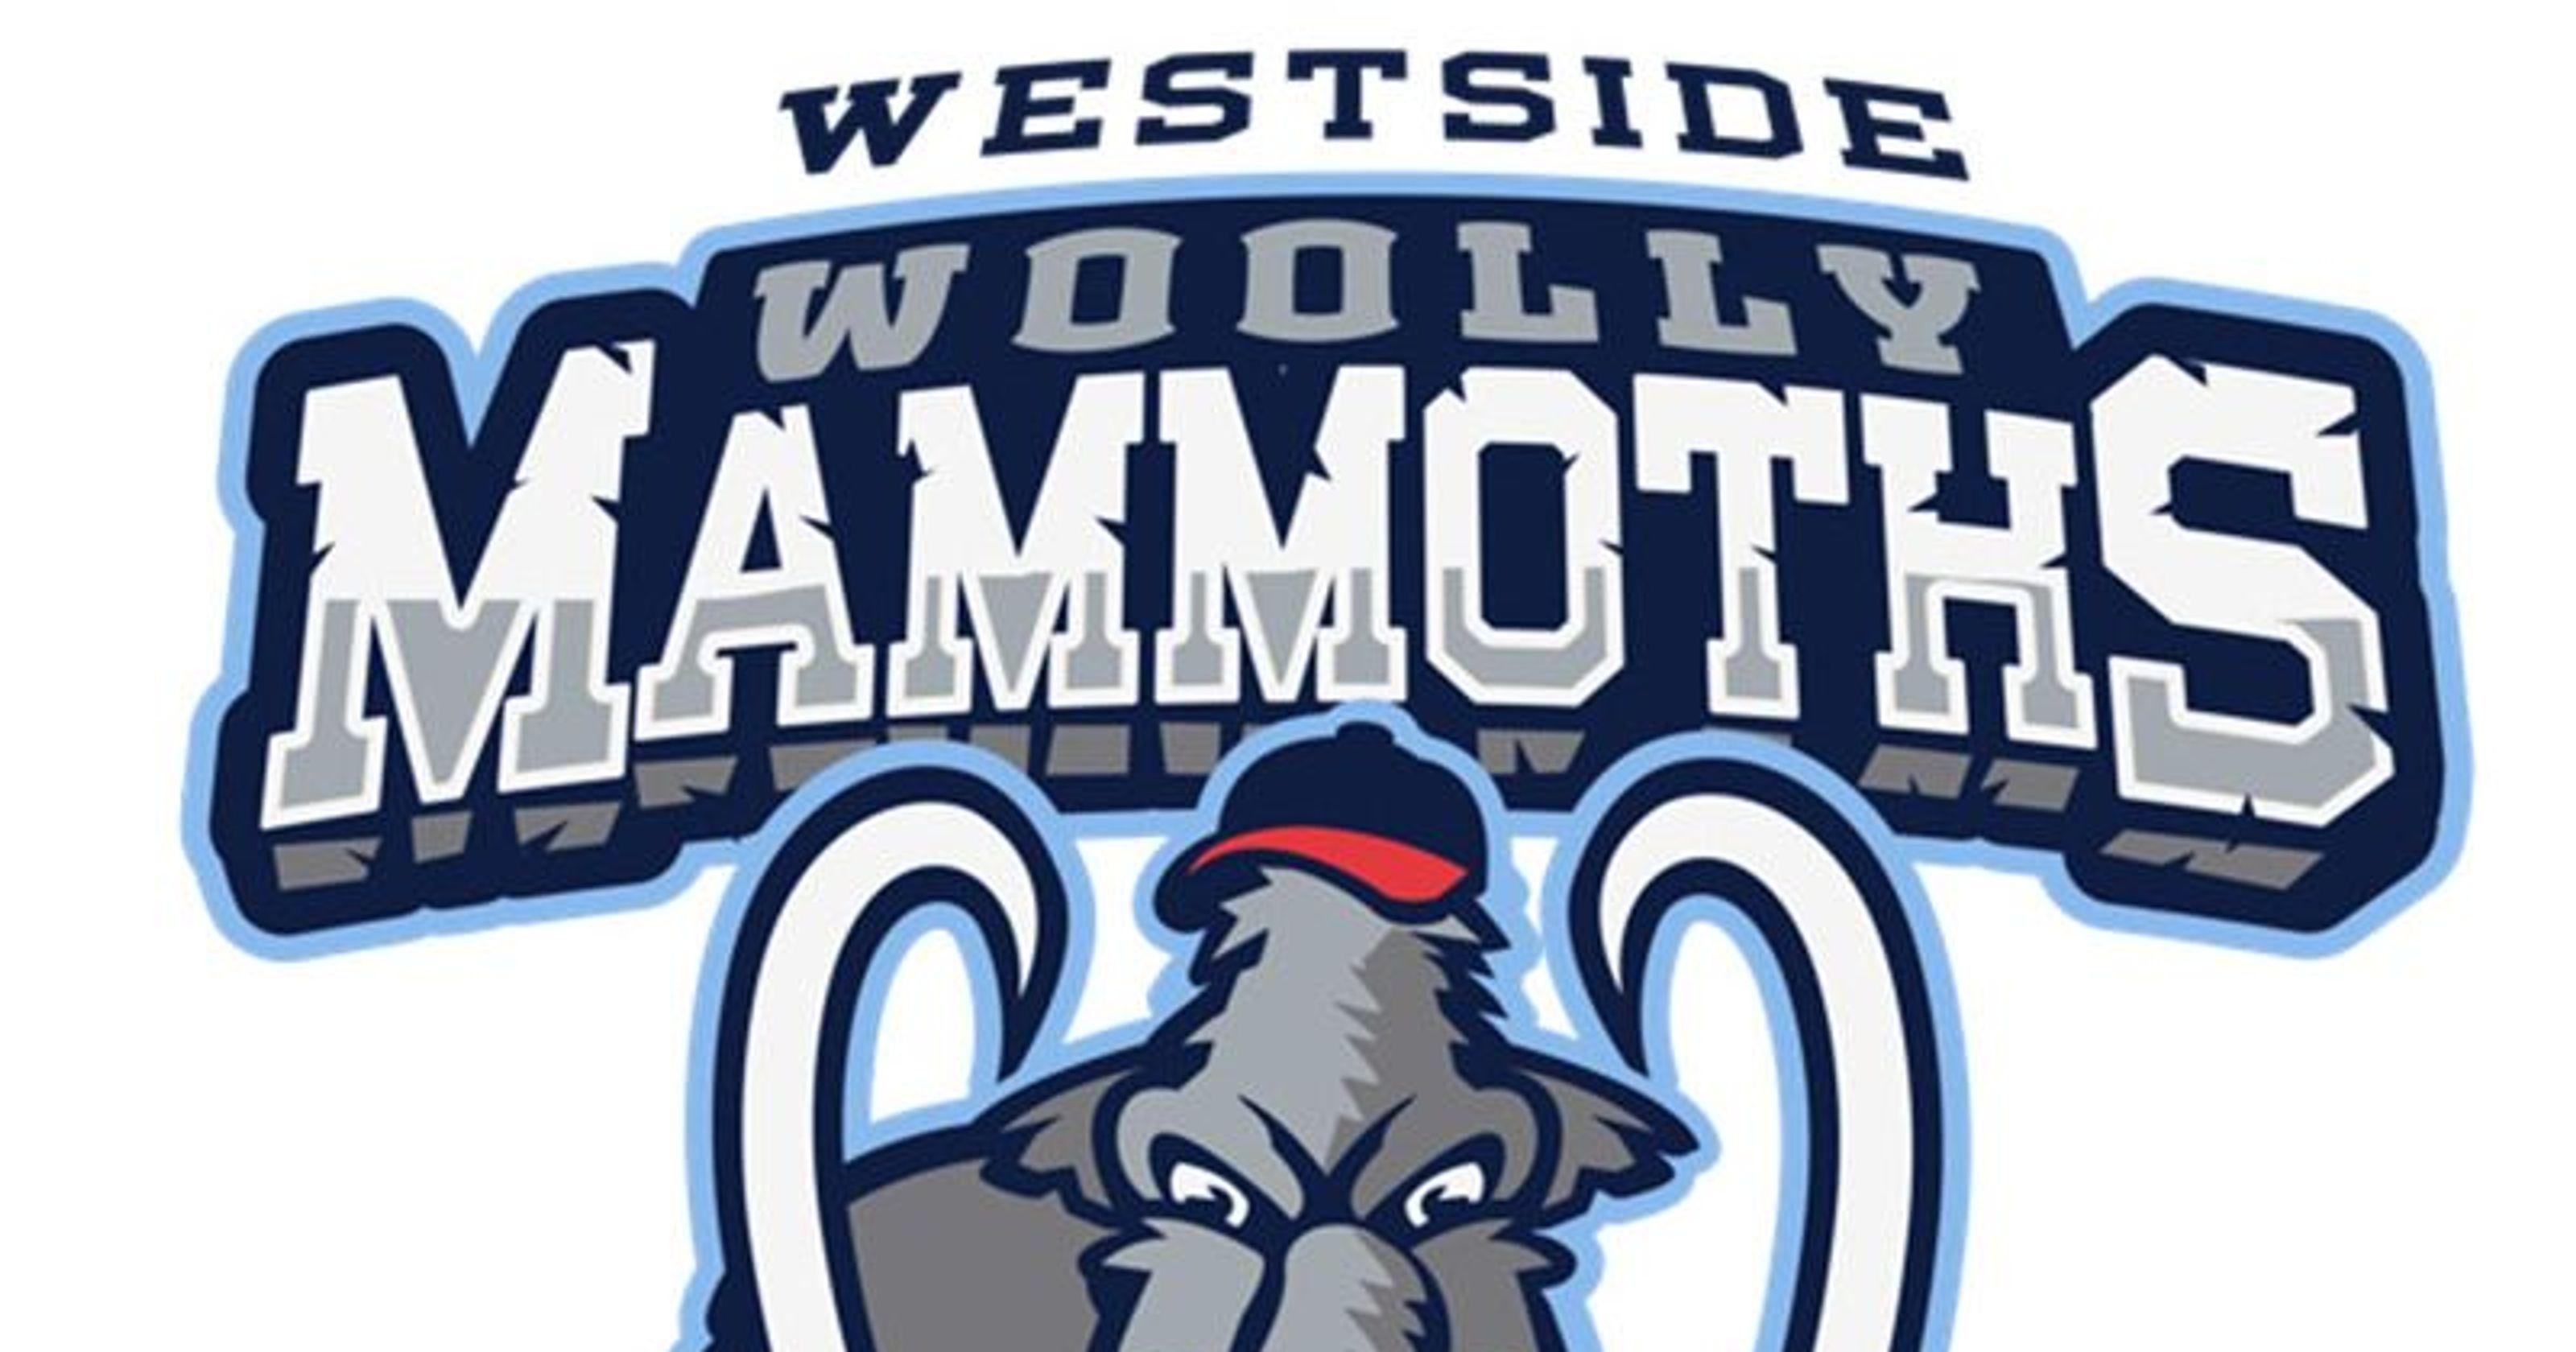 Wooly Mammoth Sports Logo - Detroit's latest pro baseball team: Westside Woolly Mammoths